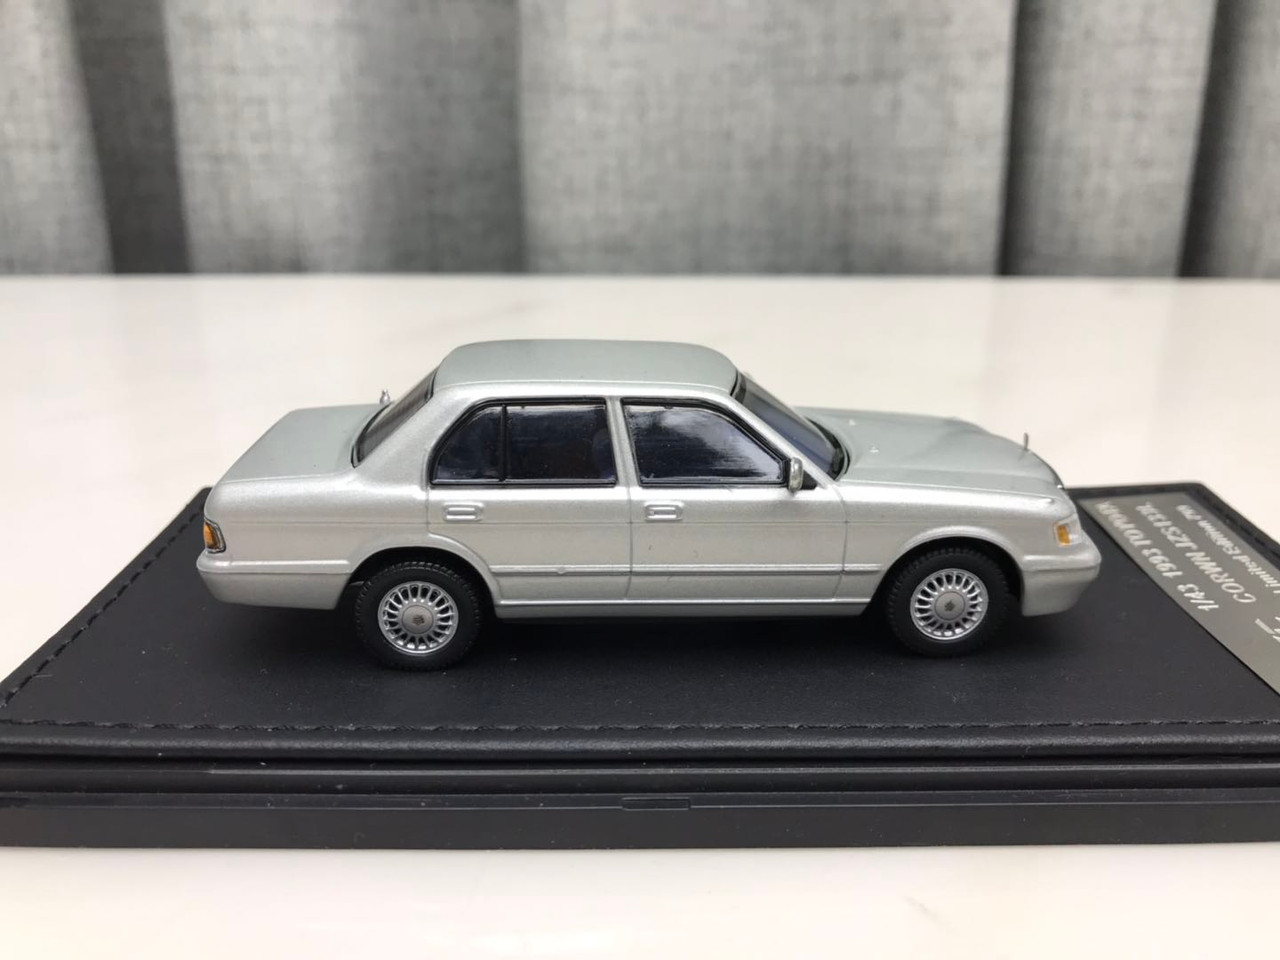 1/43 STC Dealer Edition 1991-1995 Toyota Crown (Silver) Car Model